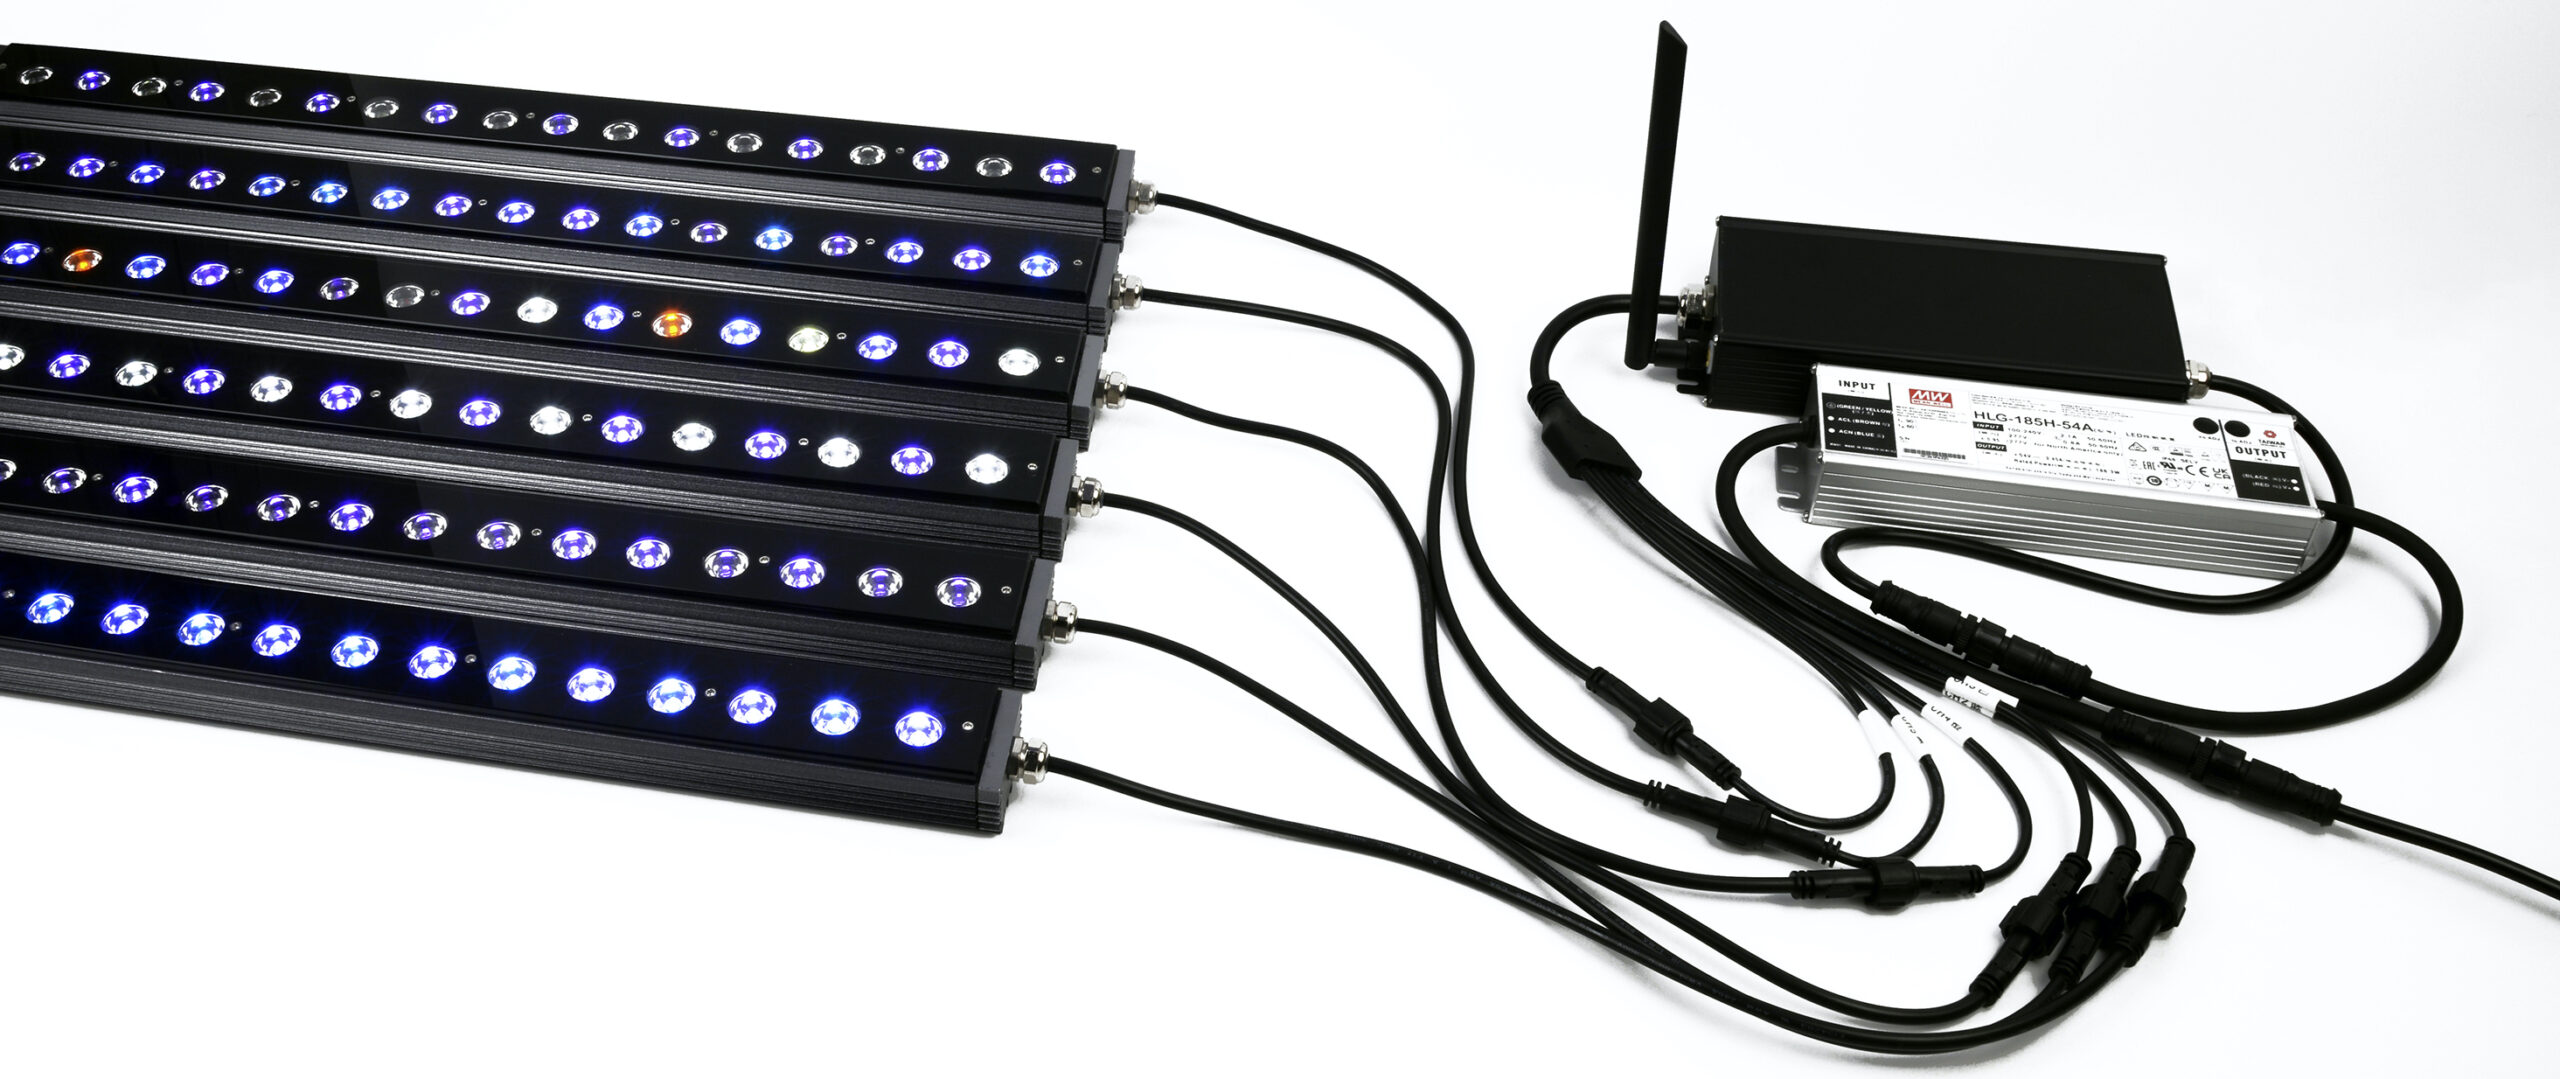 Orphek Osix - kontroler paska LED rafy Or3